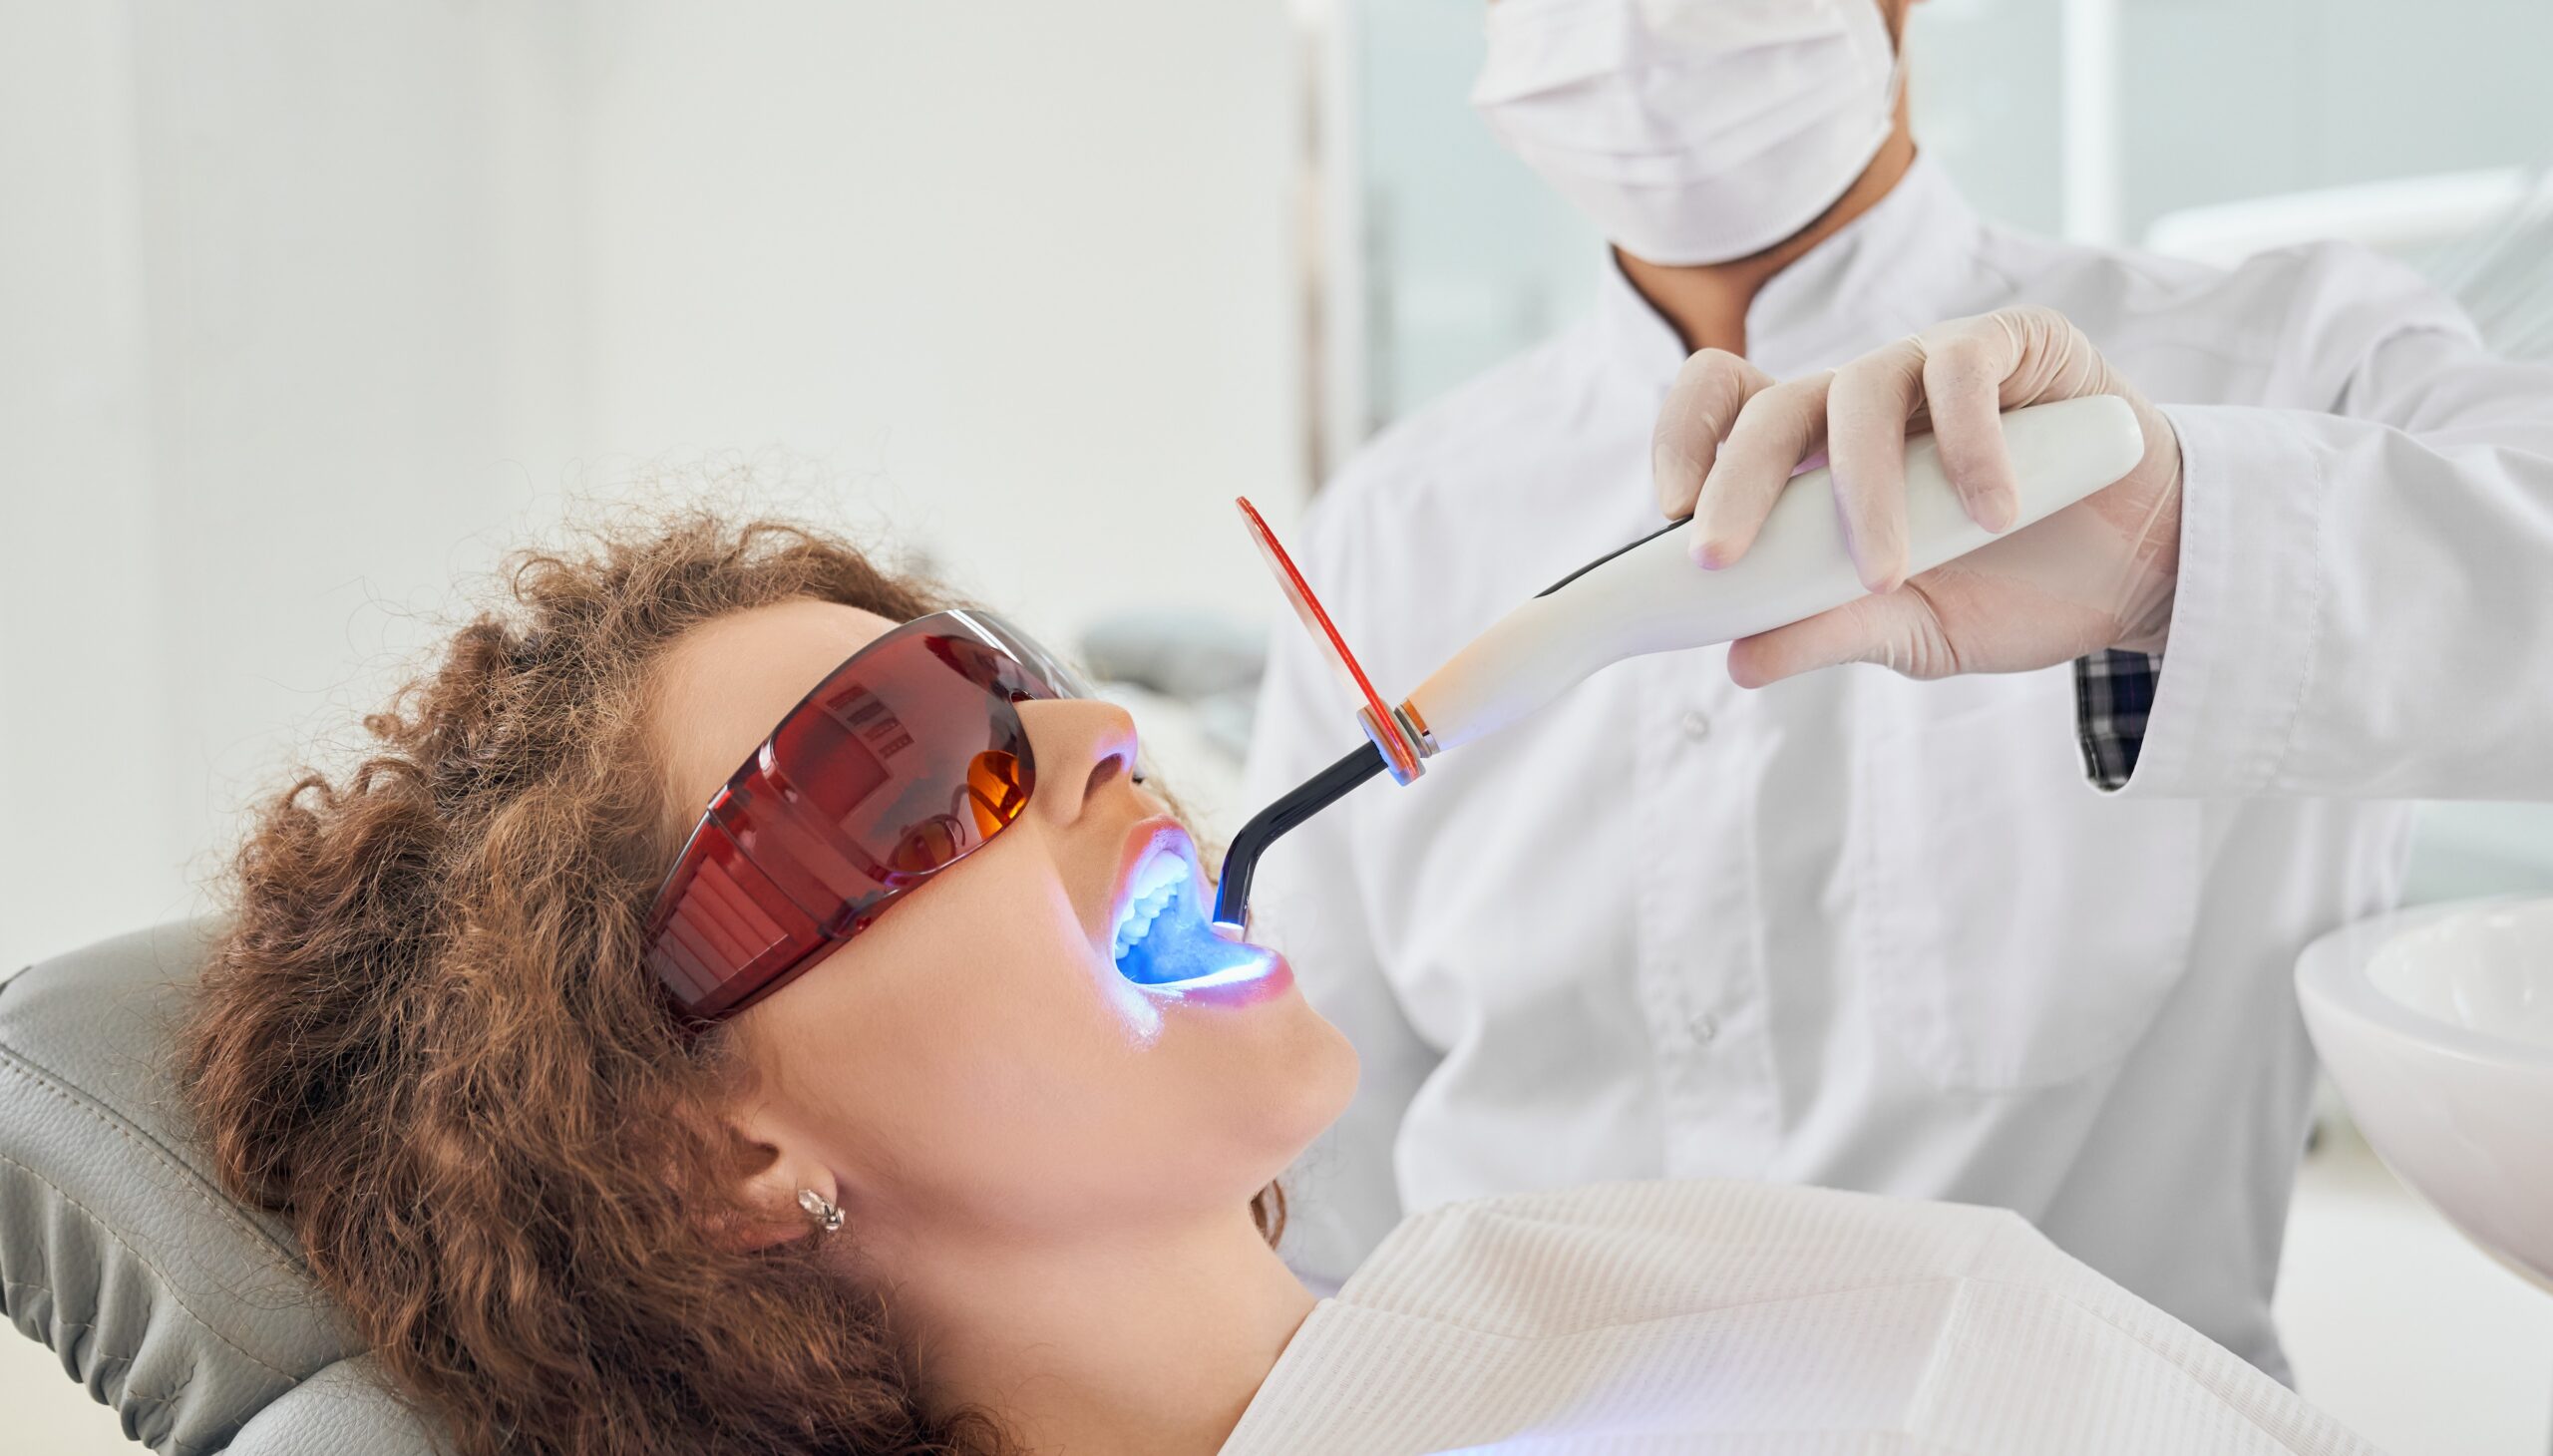 dentista utilizando fotopolimerizador nos dentes do paciente